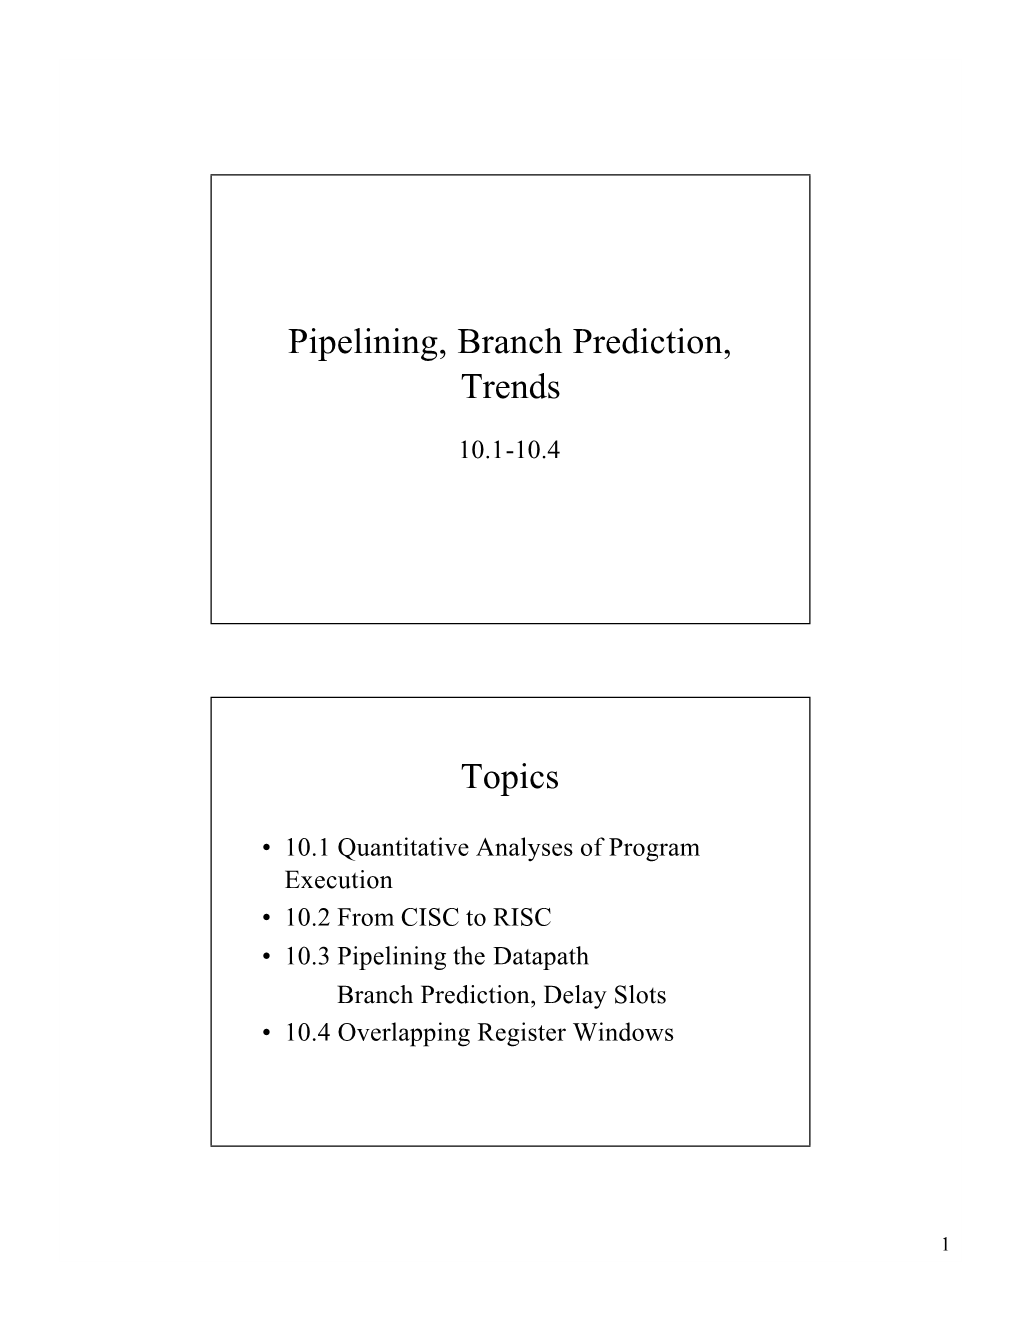 Pipelining, Branch Prediction, Trends Topics